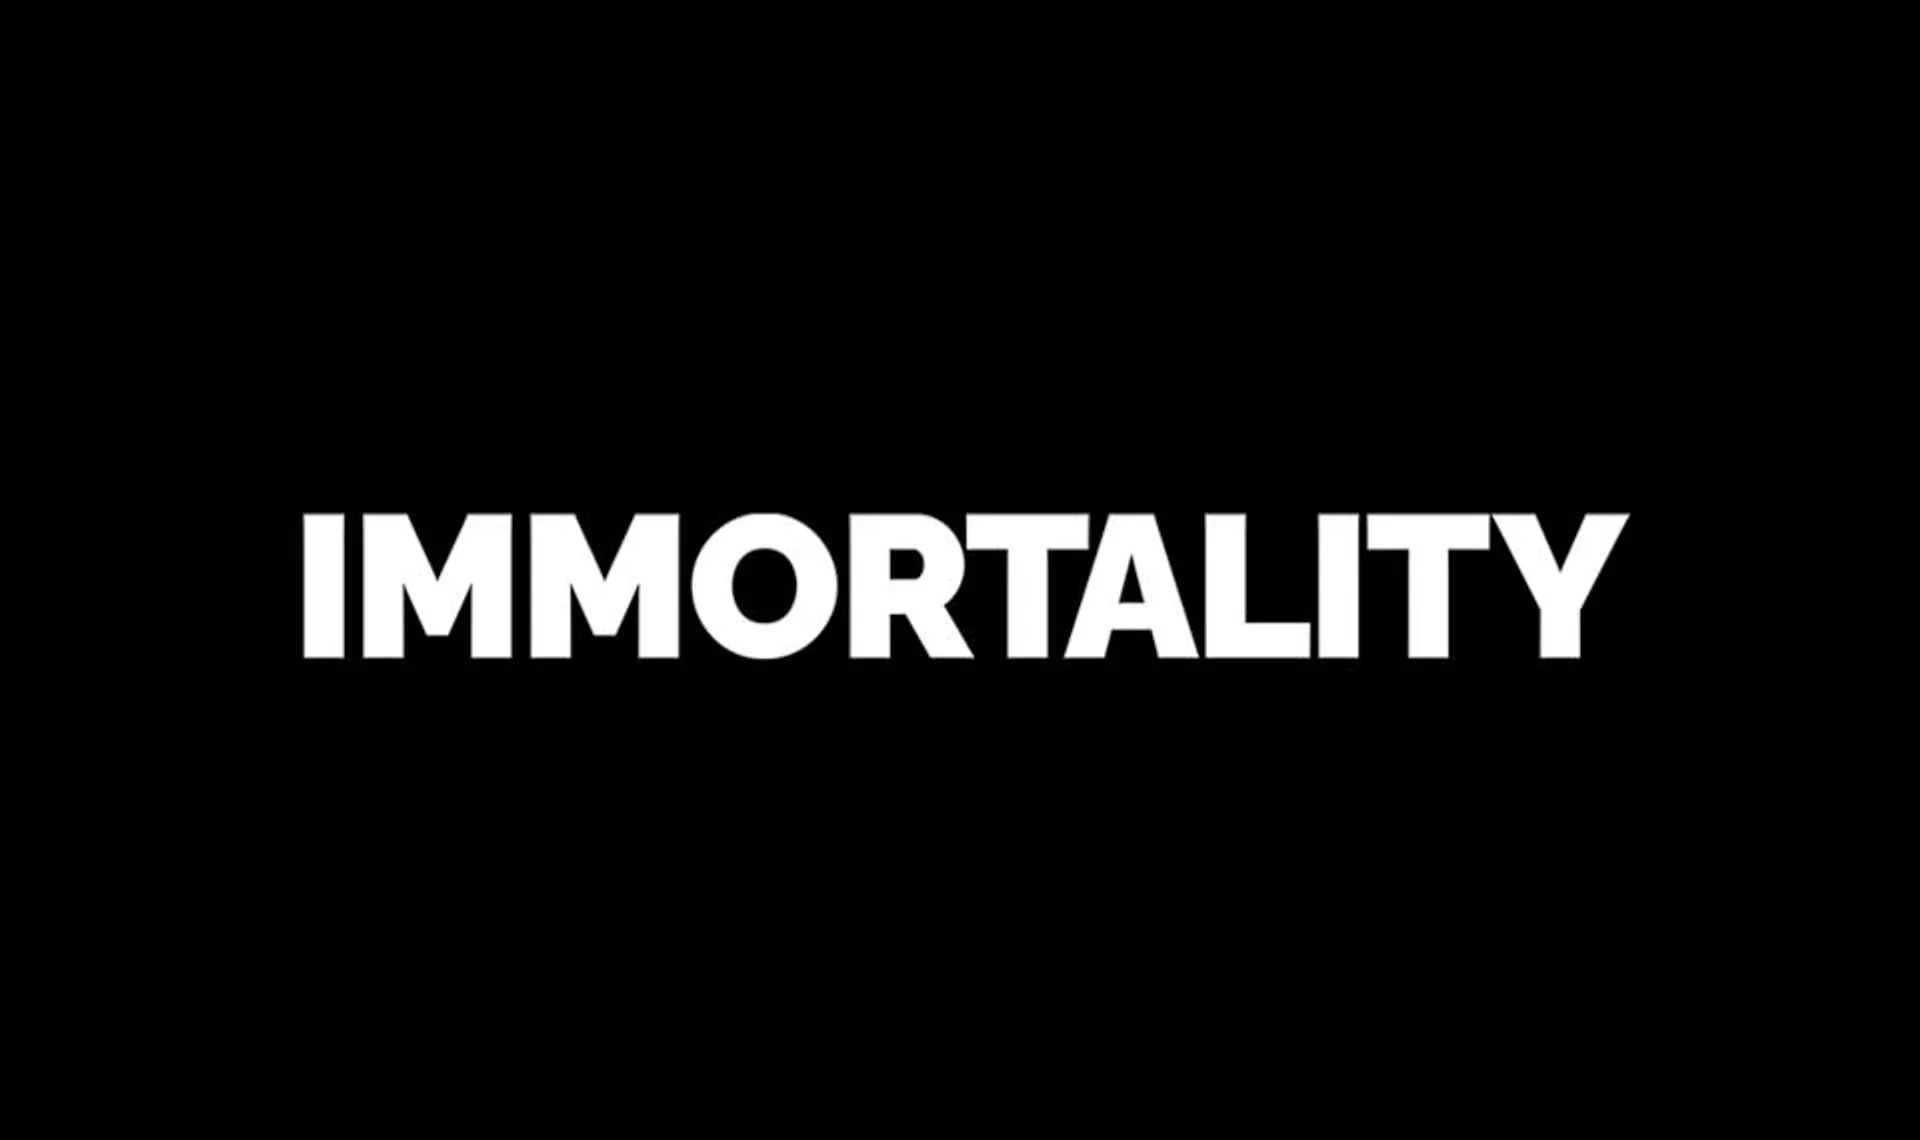 IMMORTALITY